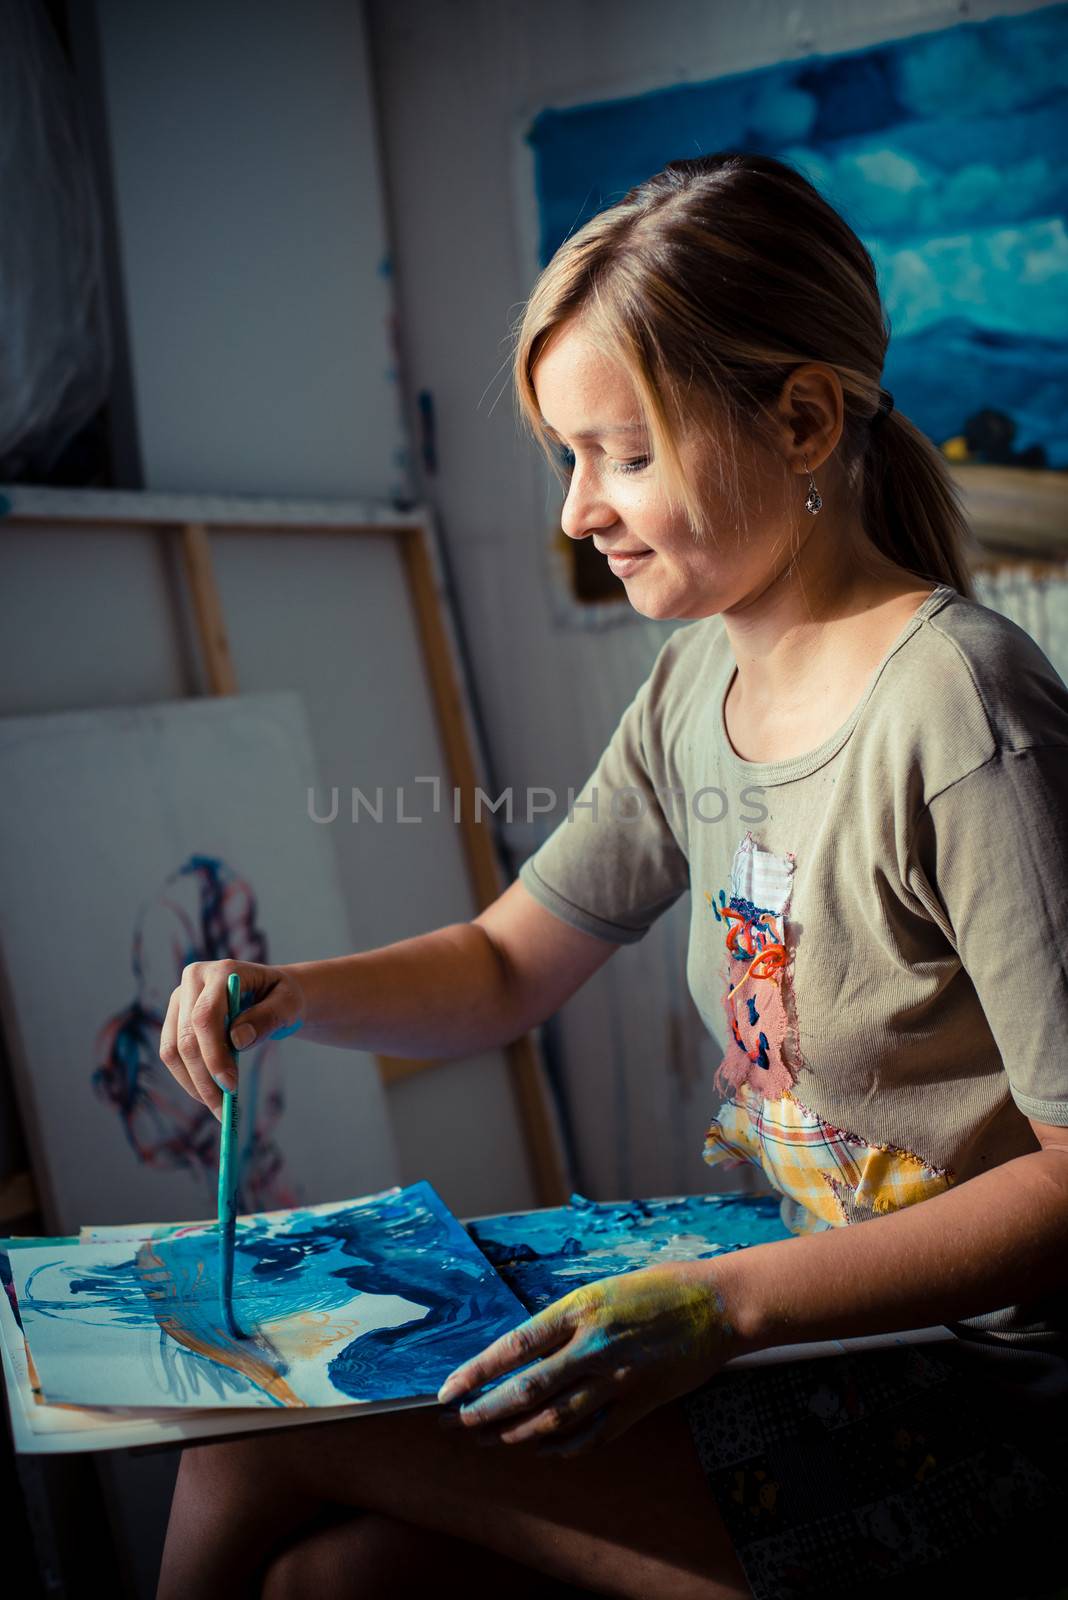 beautiful blonde woman painter in her studio